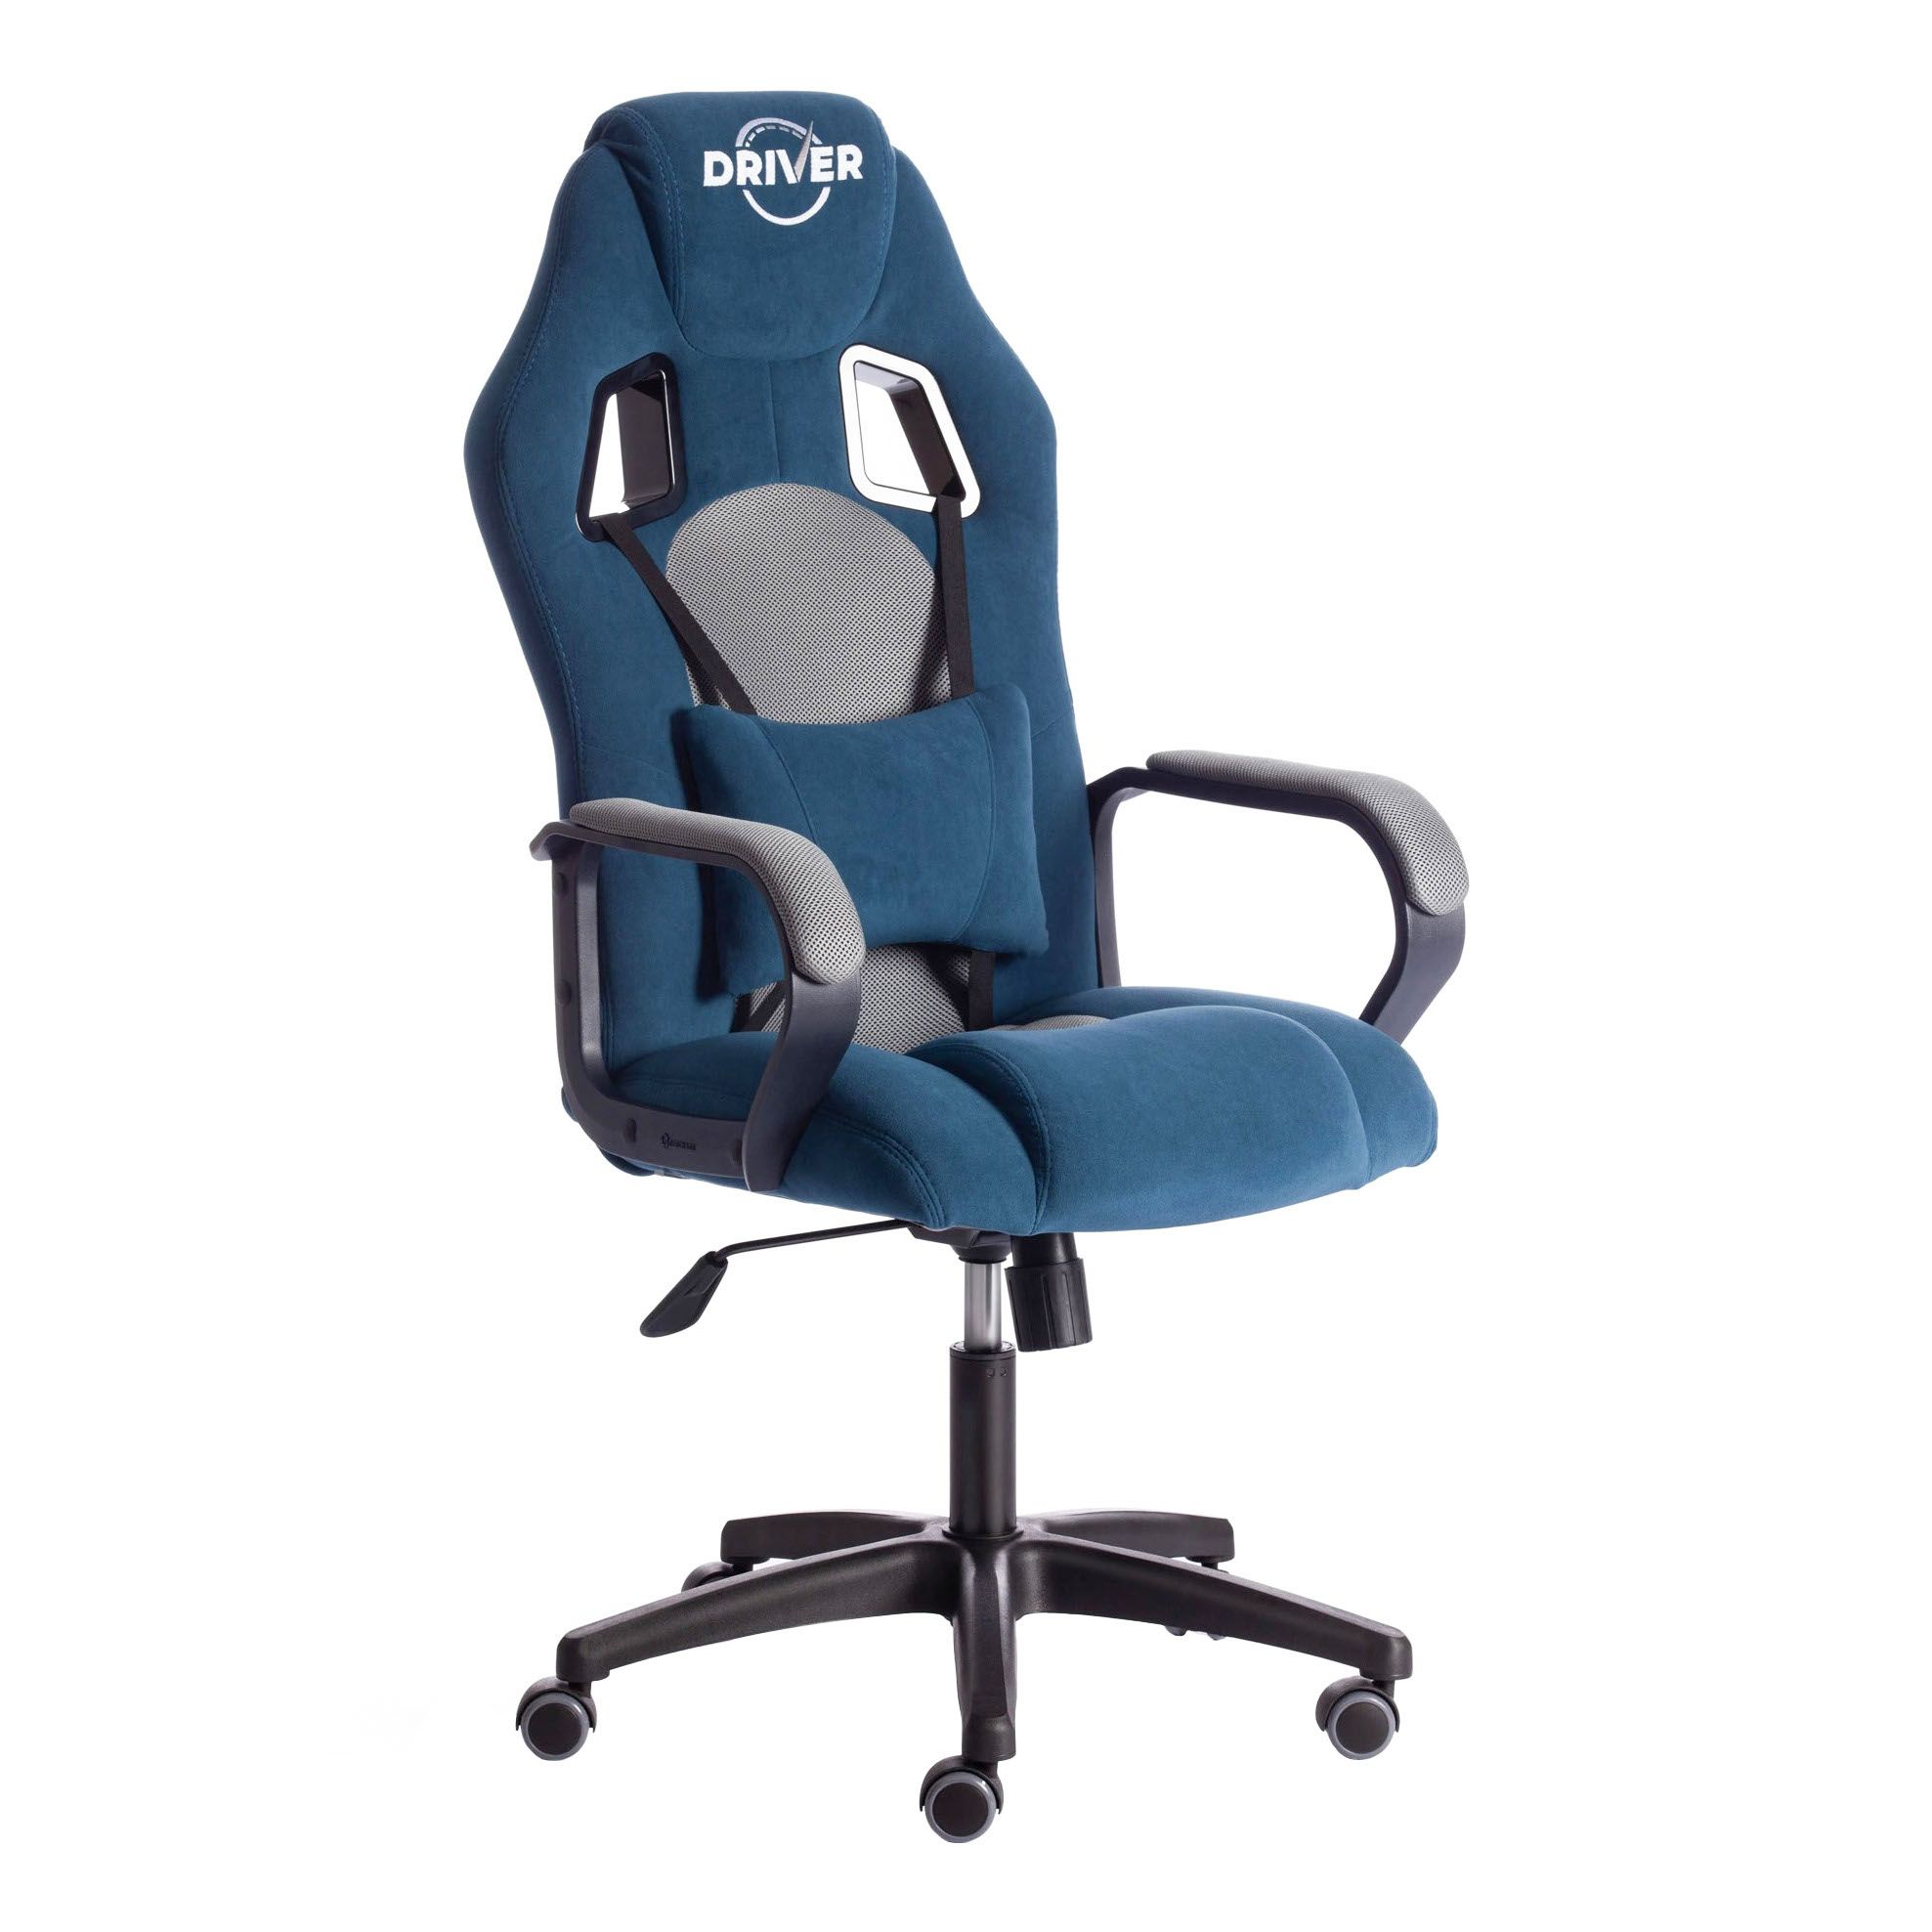 

Кресло офисное TetChair Driver серо-синее 55 х 49 х 126 см, Серый;синий